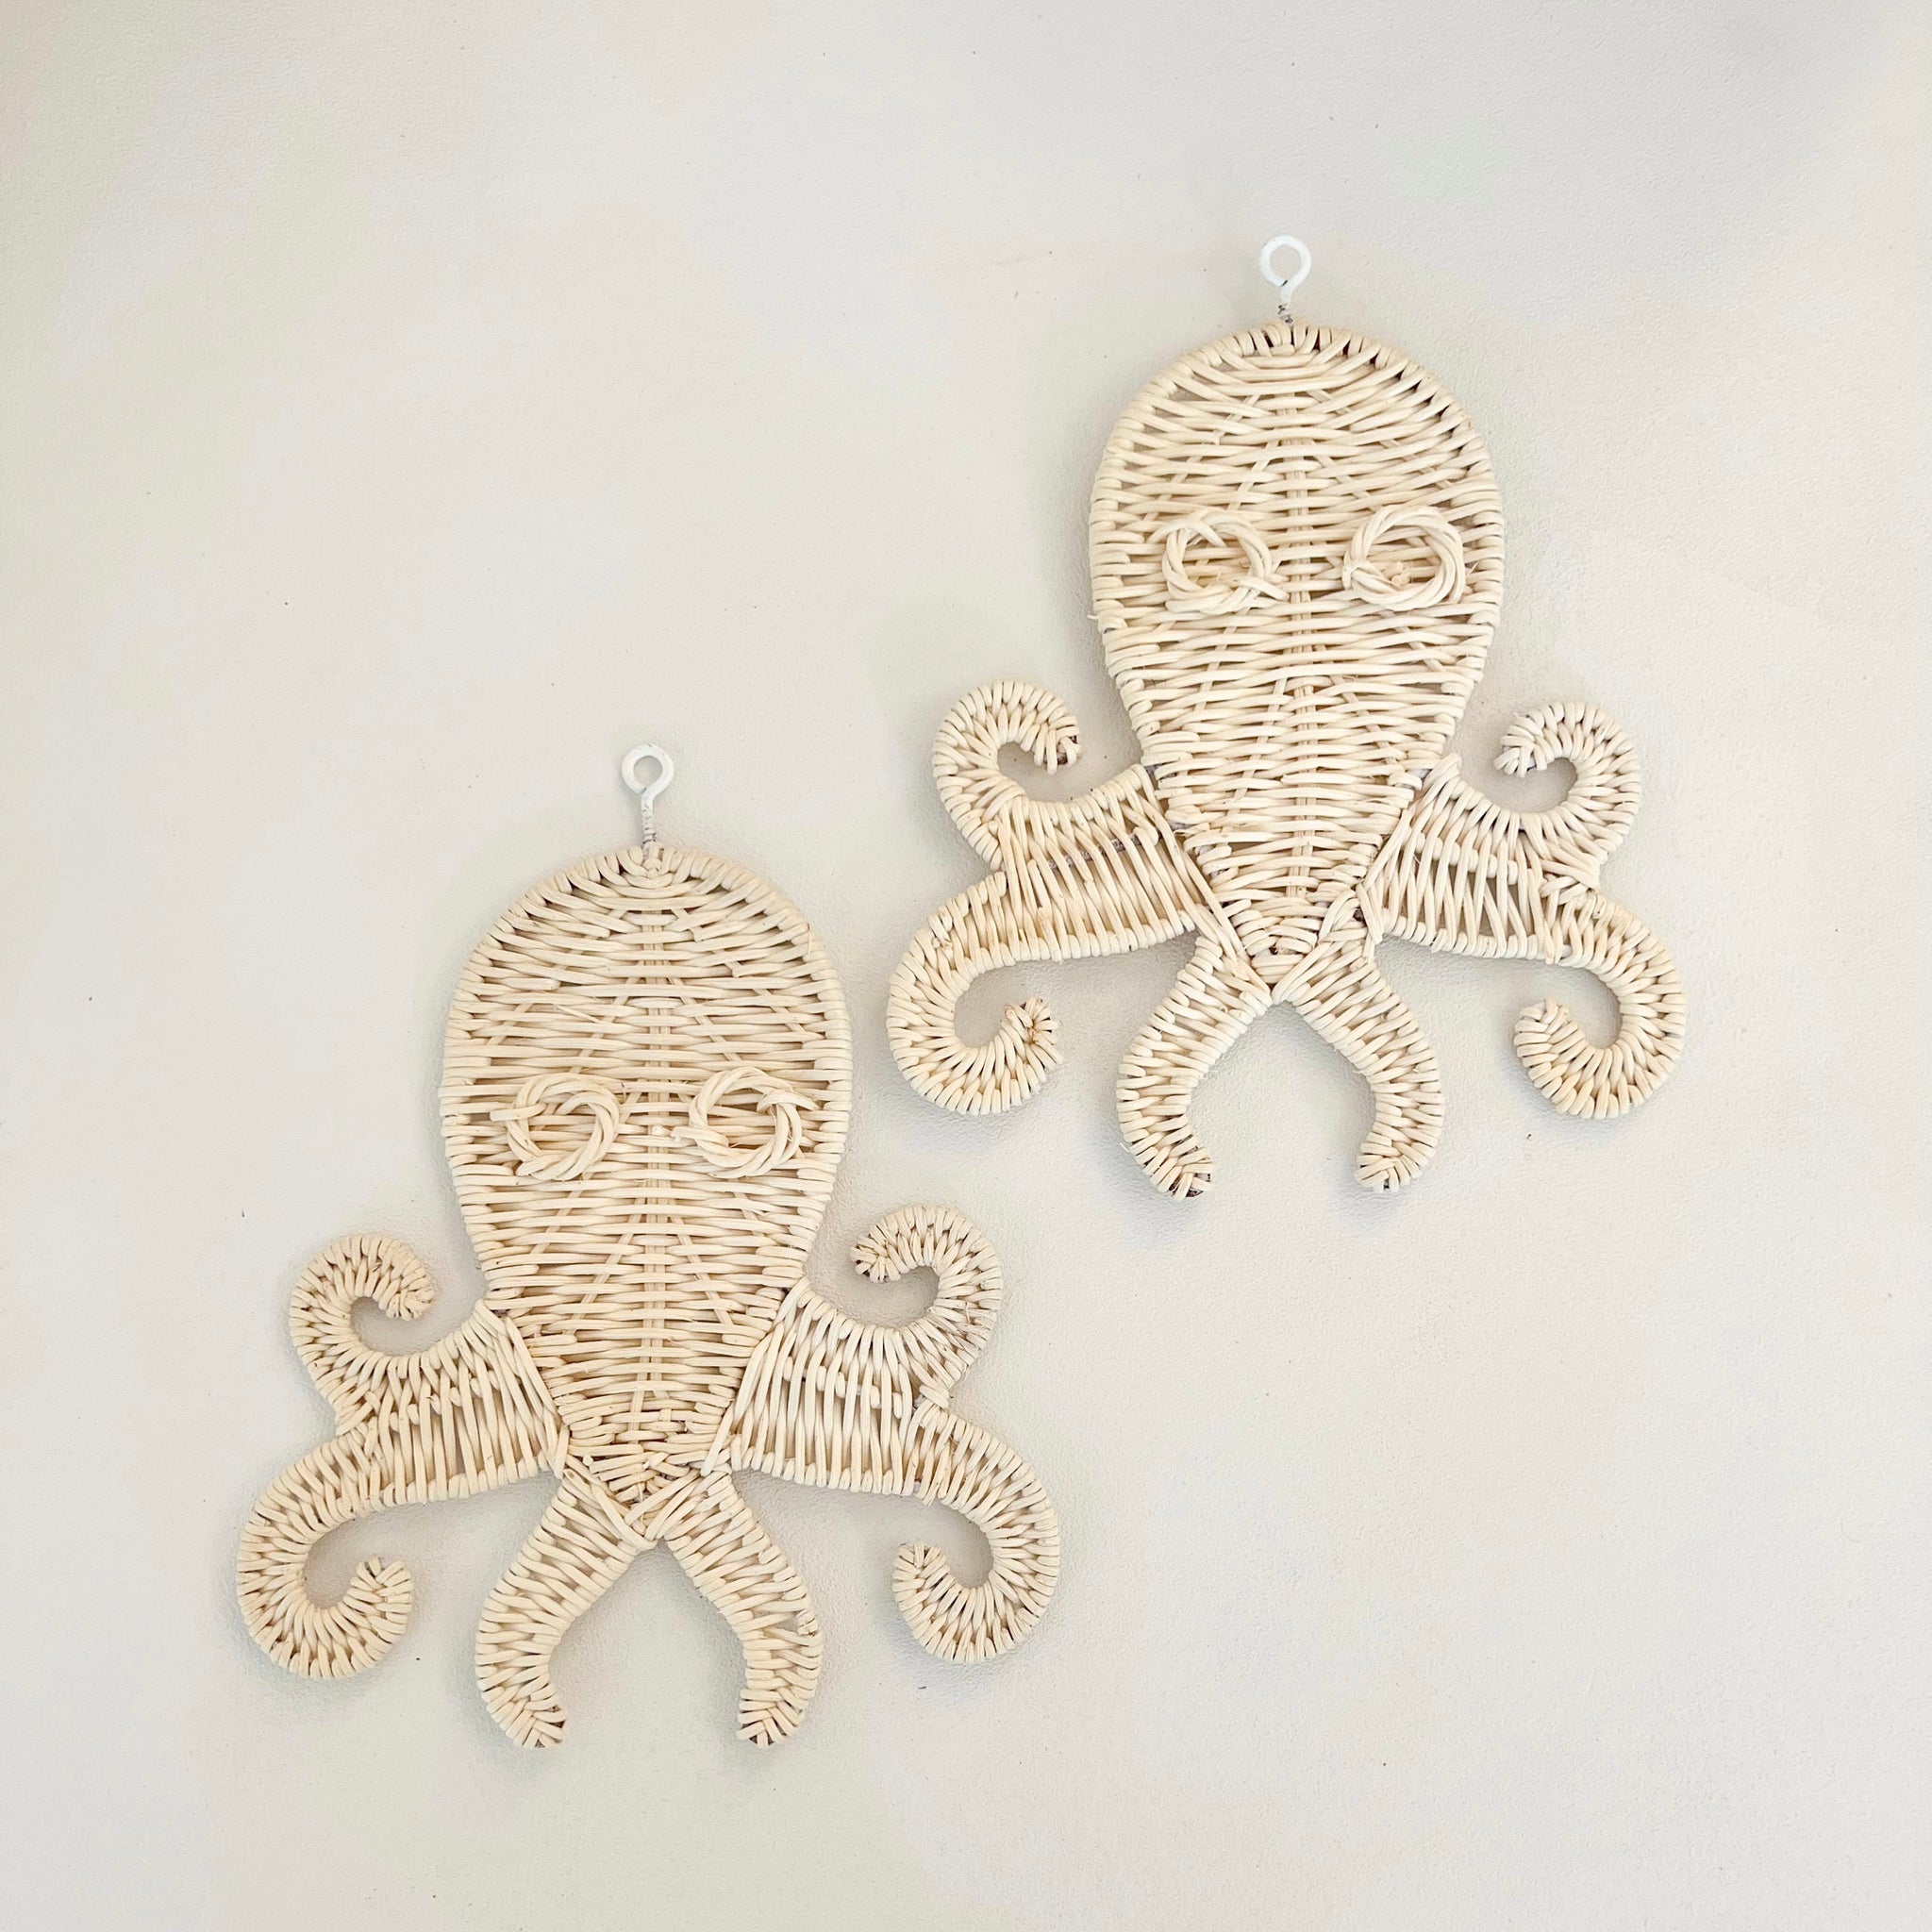 Olly Octopus - Small - Rattan Wall Decor